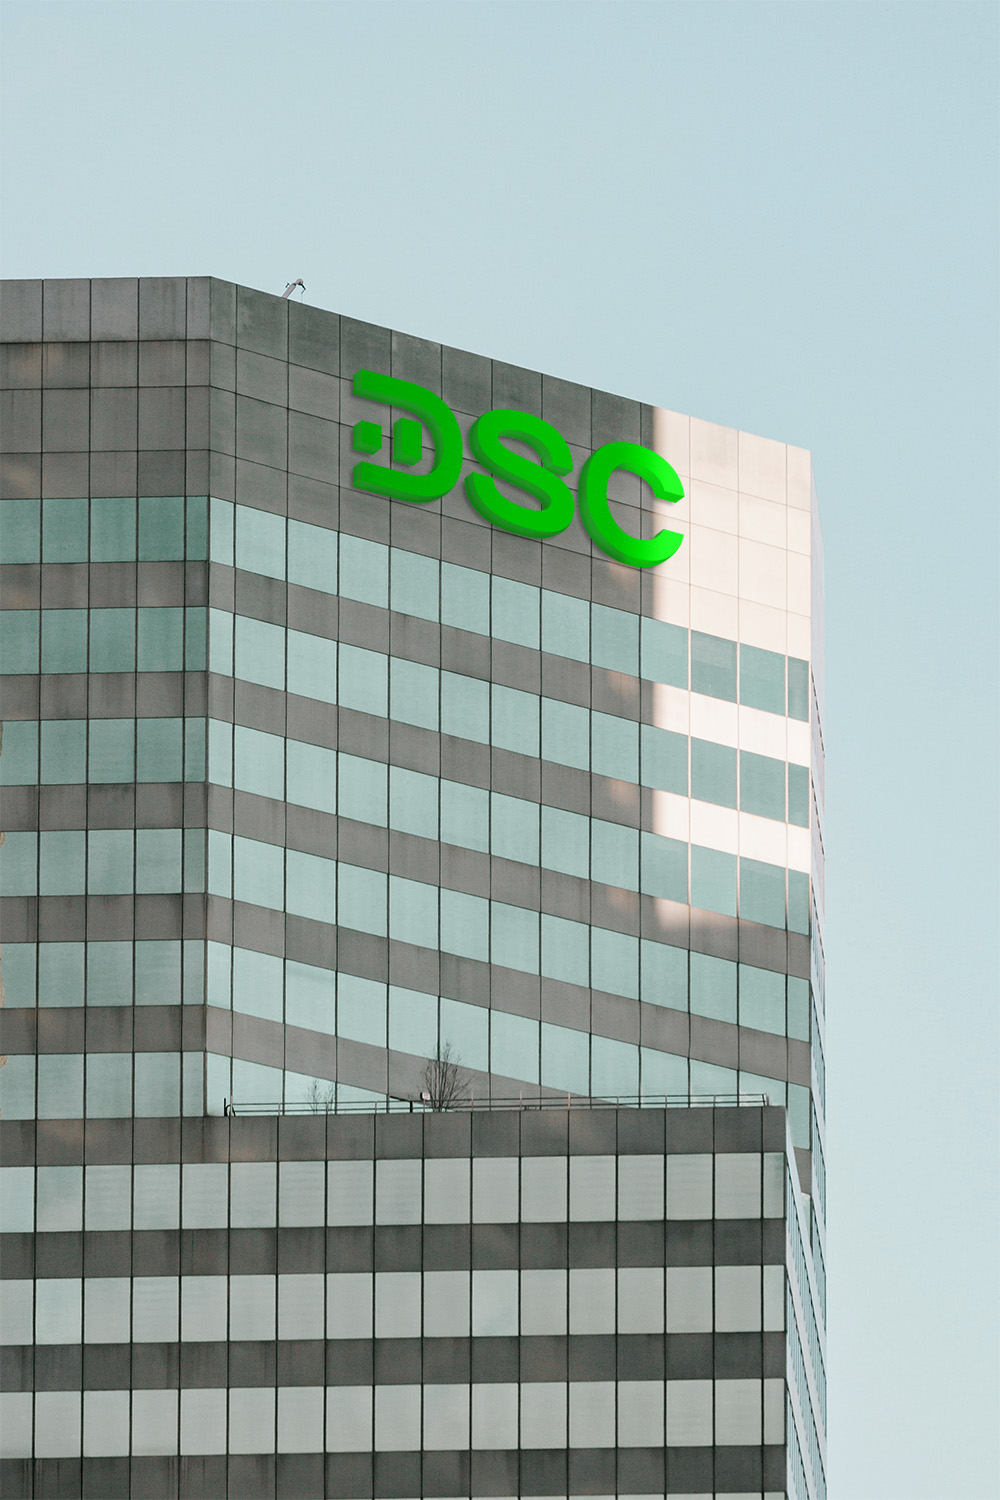 DSC Logo outdoor signage on a building facade mock-up